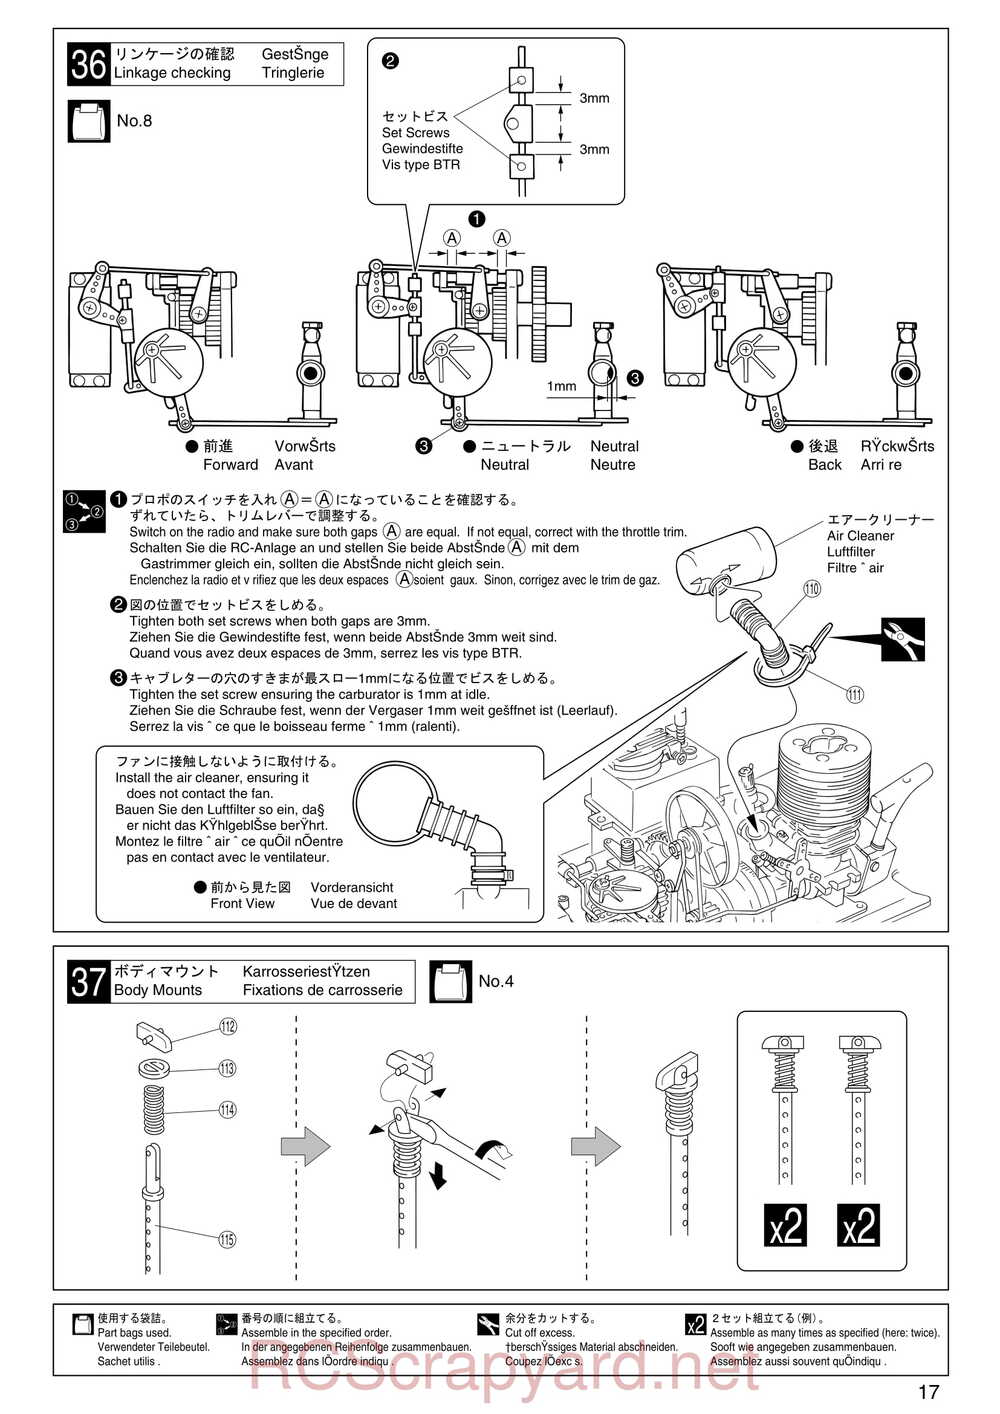 Kyosho - 31231 - Mega-Force-Jr - Manual - Page 17